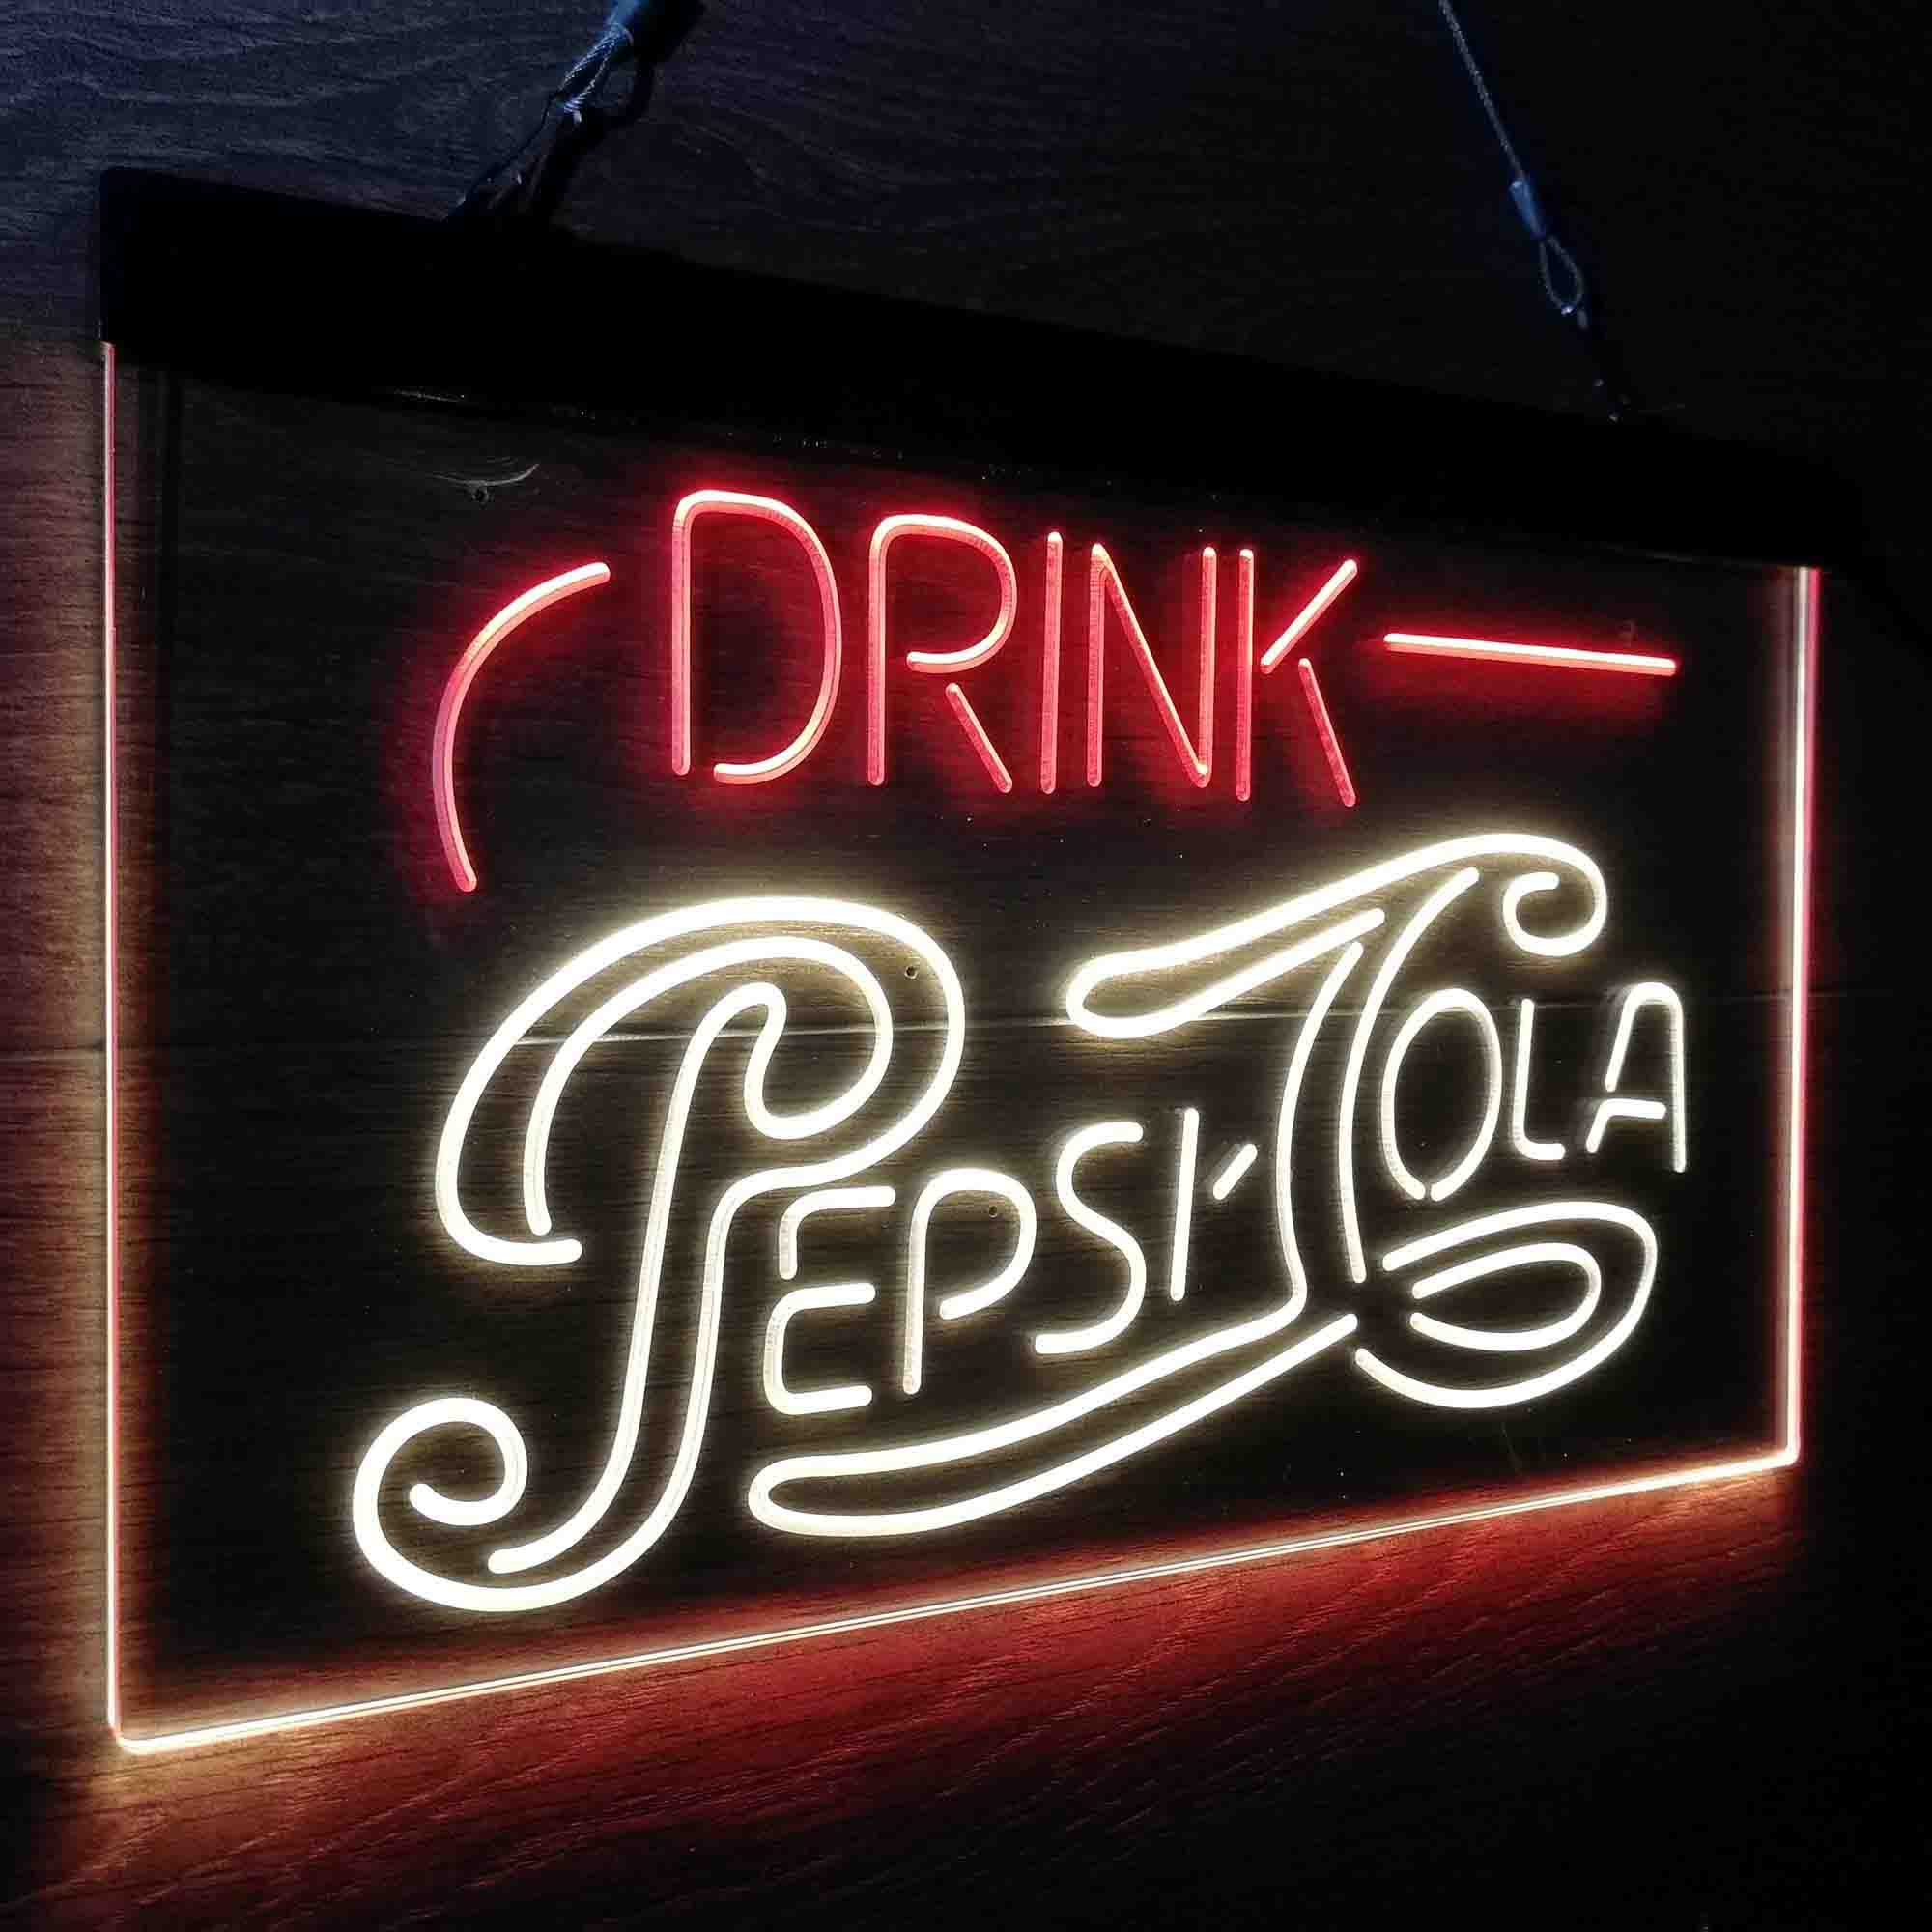 Drink Pepsi Cola Gift Beer Bar Neon-Like LED Sign